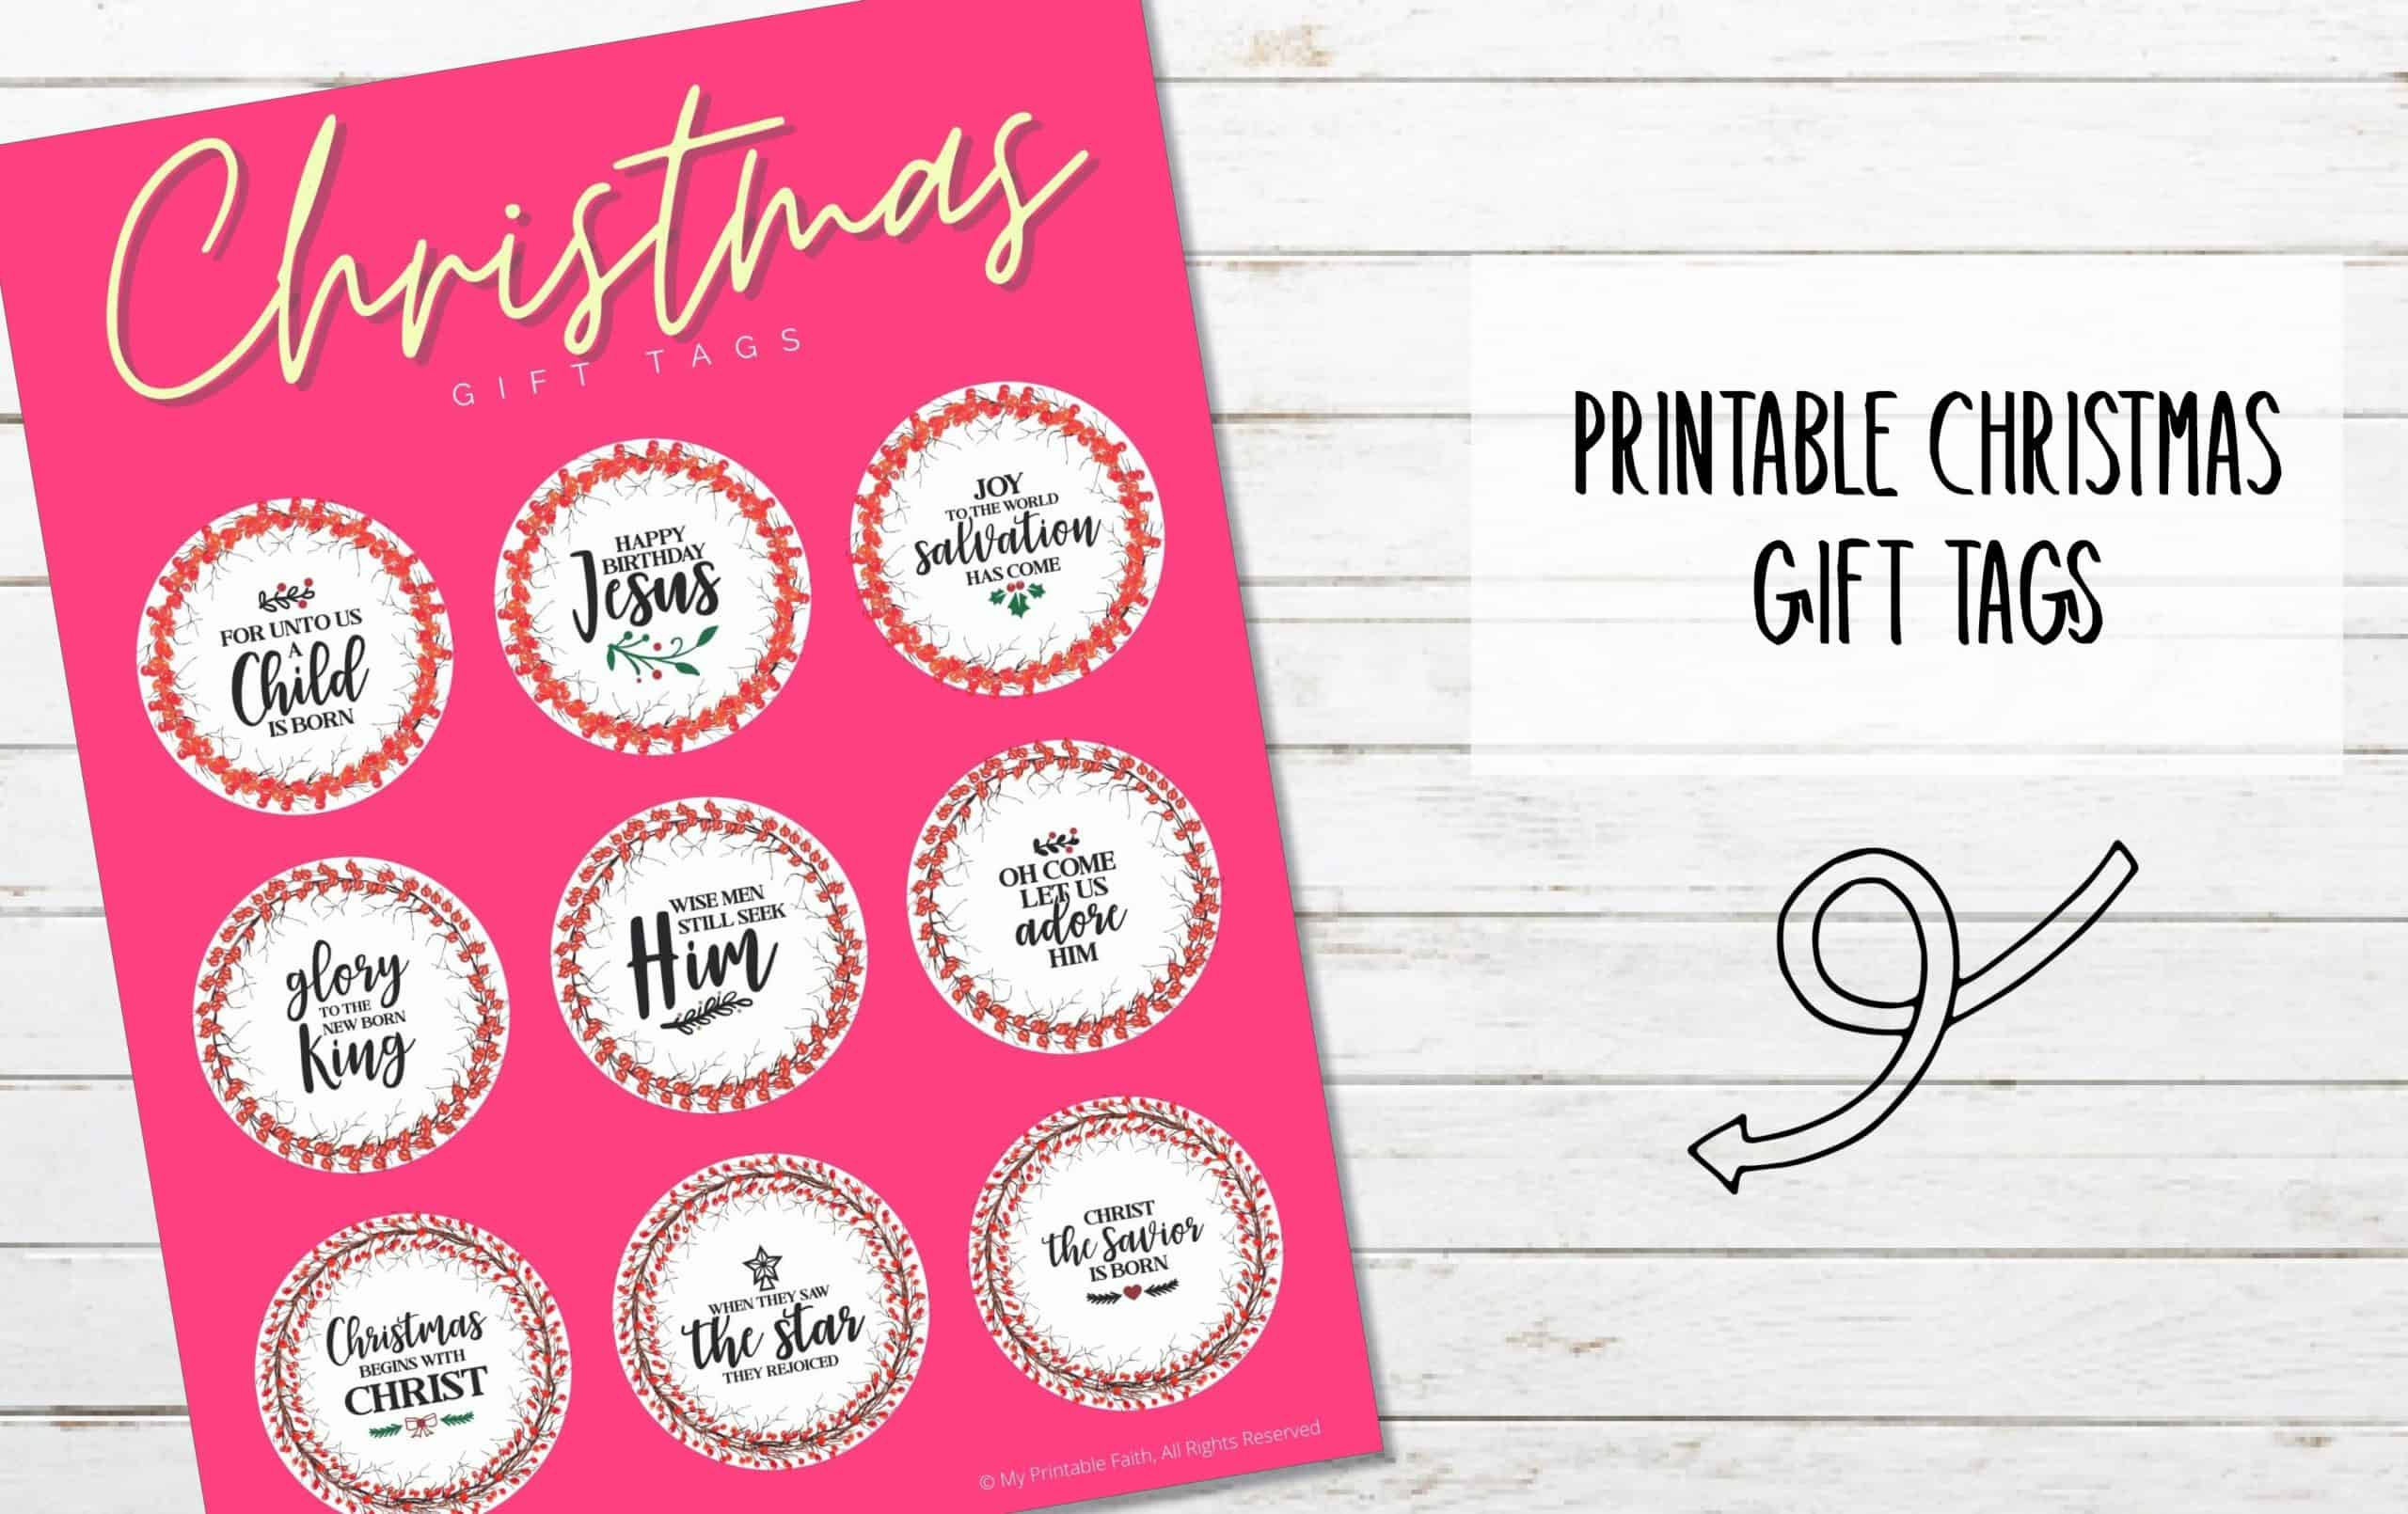 Printable Christmas Gift Tags - With scriptures